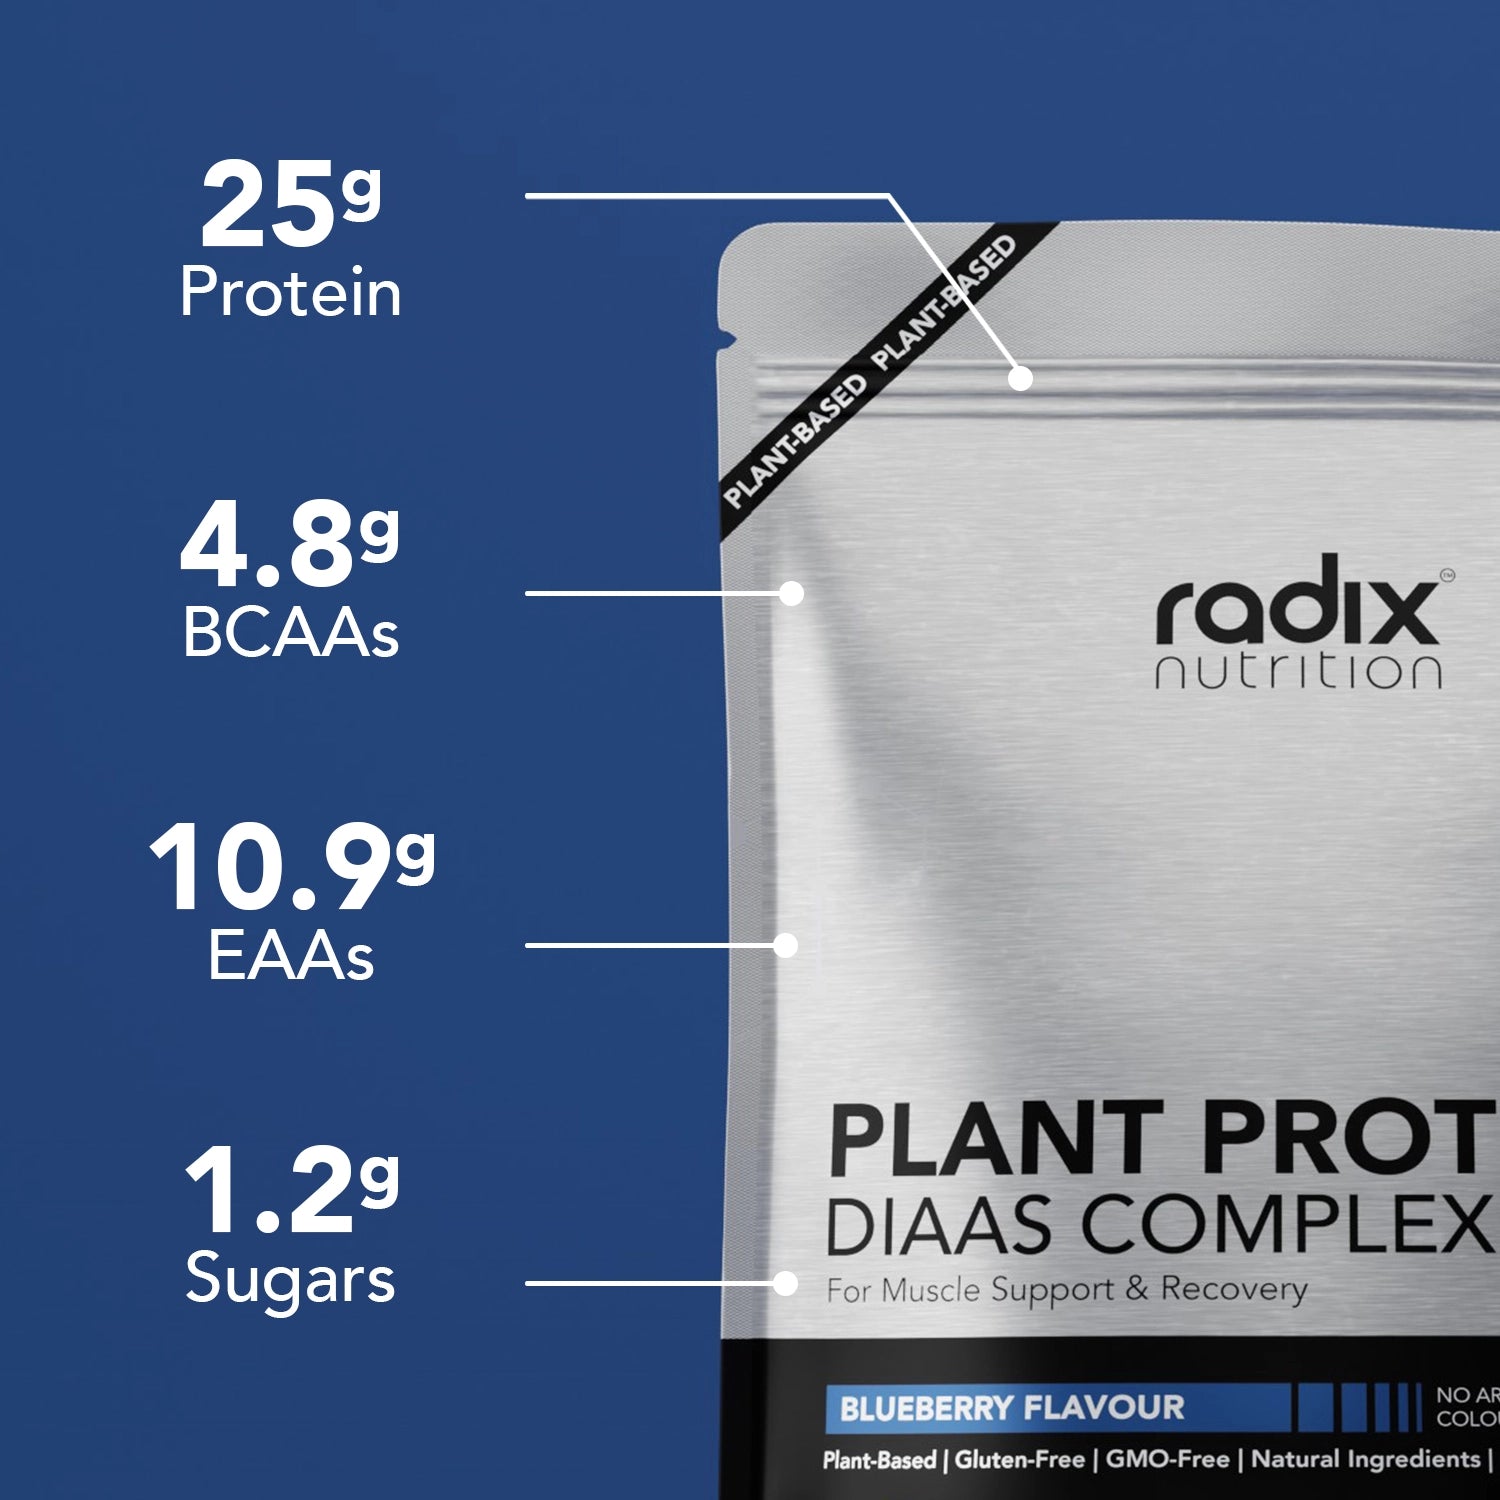 Plant Protein DIAAS Complex 1.30 - Blueberry / 1kg Bag